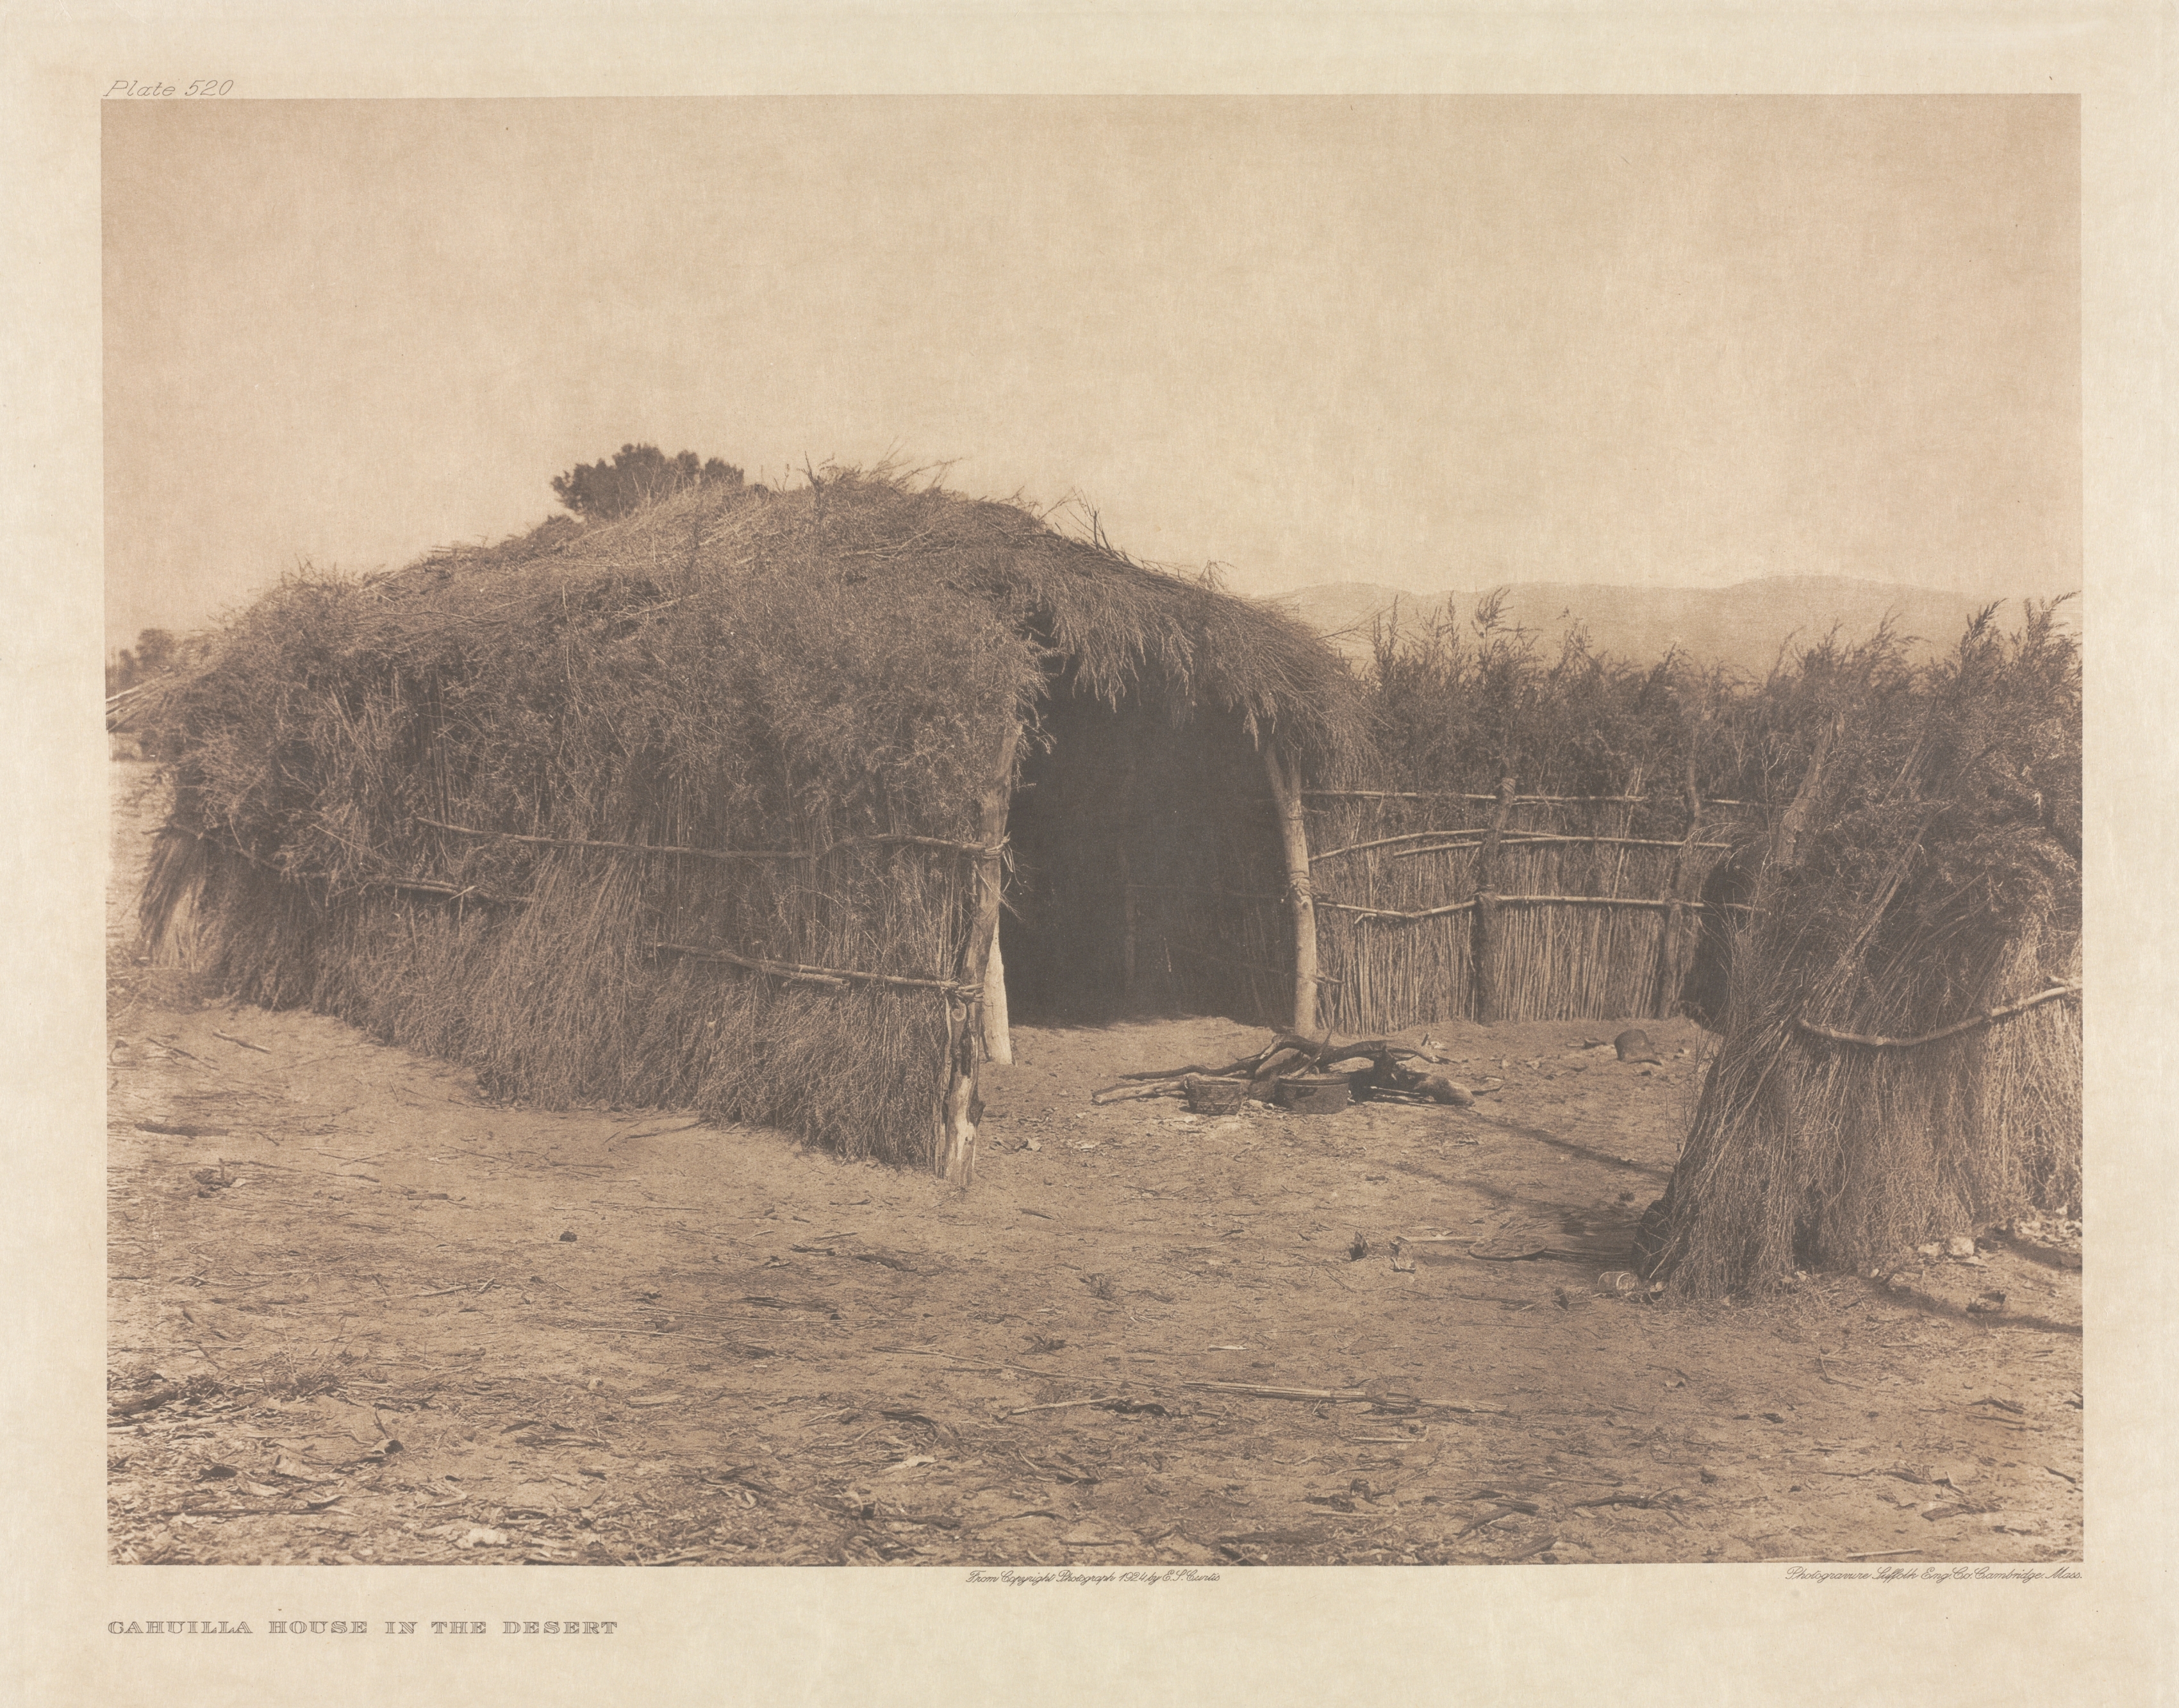 Portfolio XV, Plate 520: Cahuilla House in the Desert